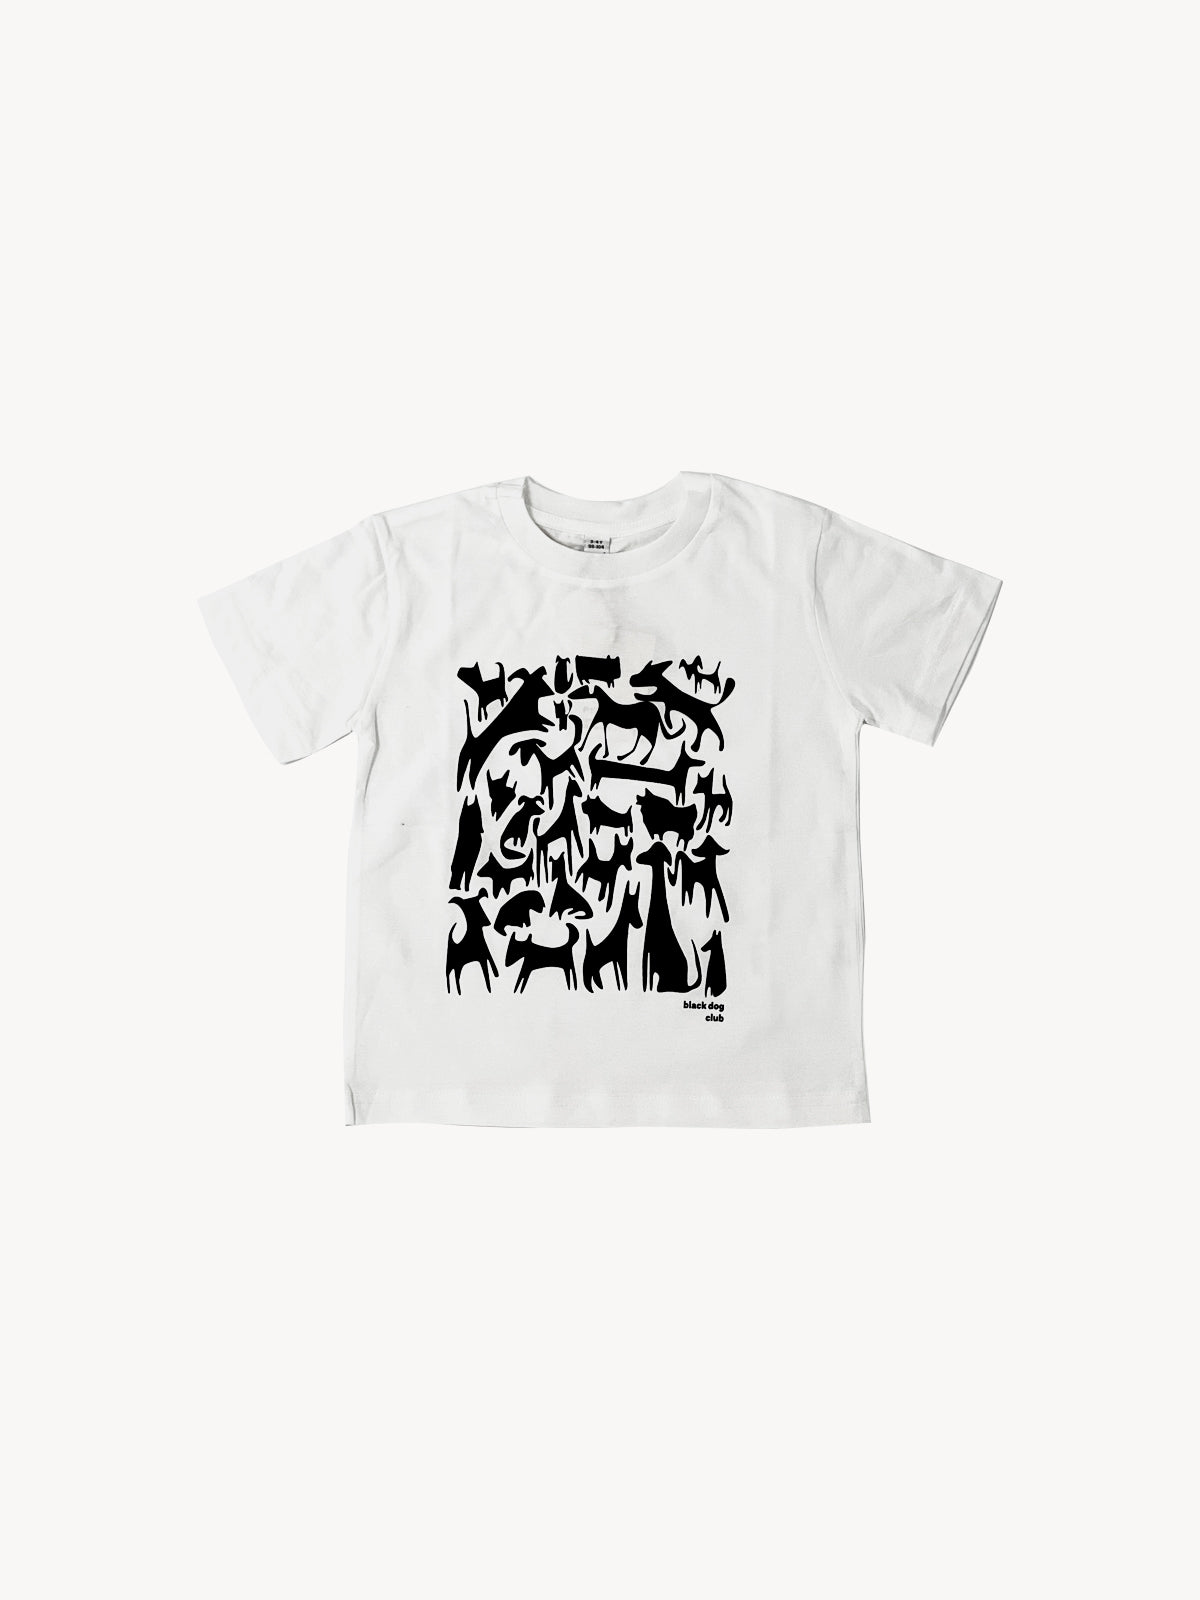 Black dog club patterned children's t-shirt